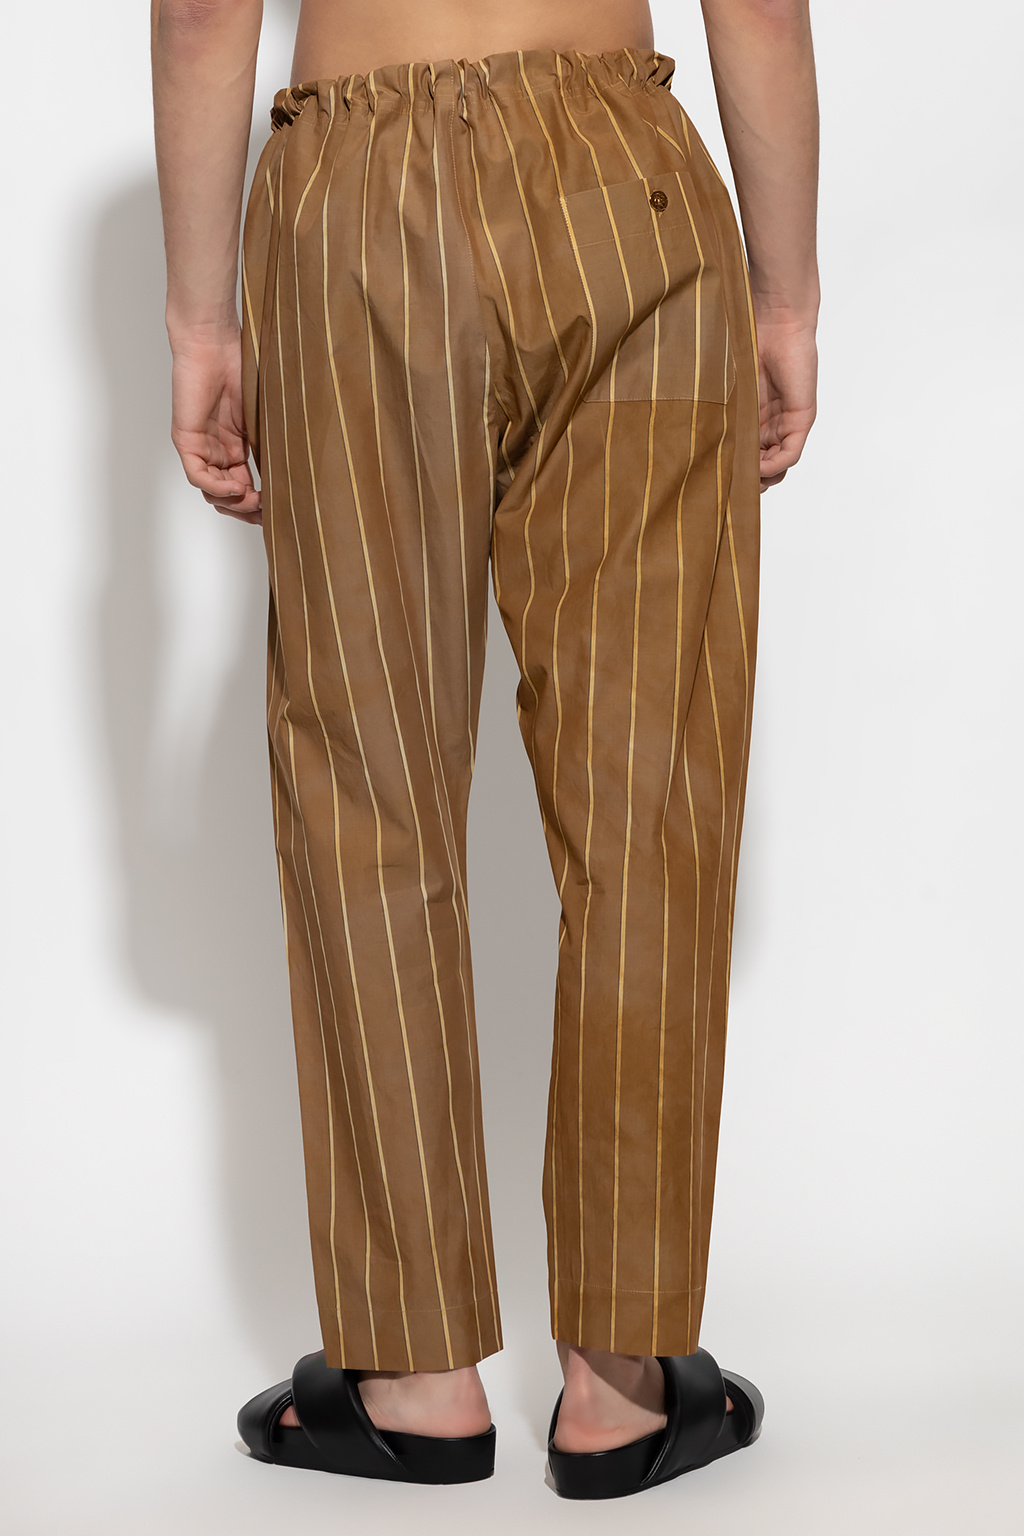 Nick Fouquet Pinstripe trousers